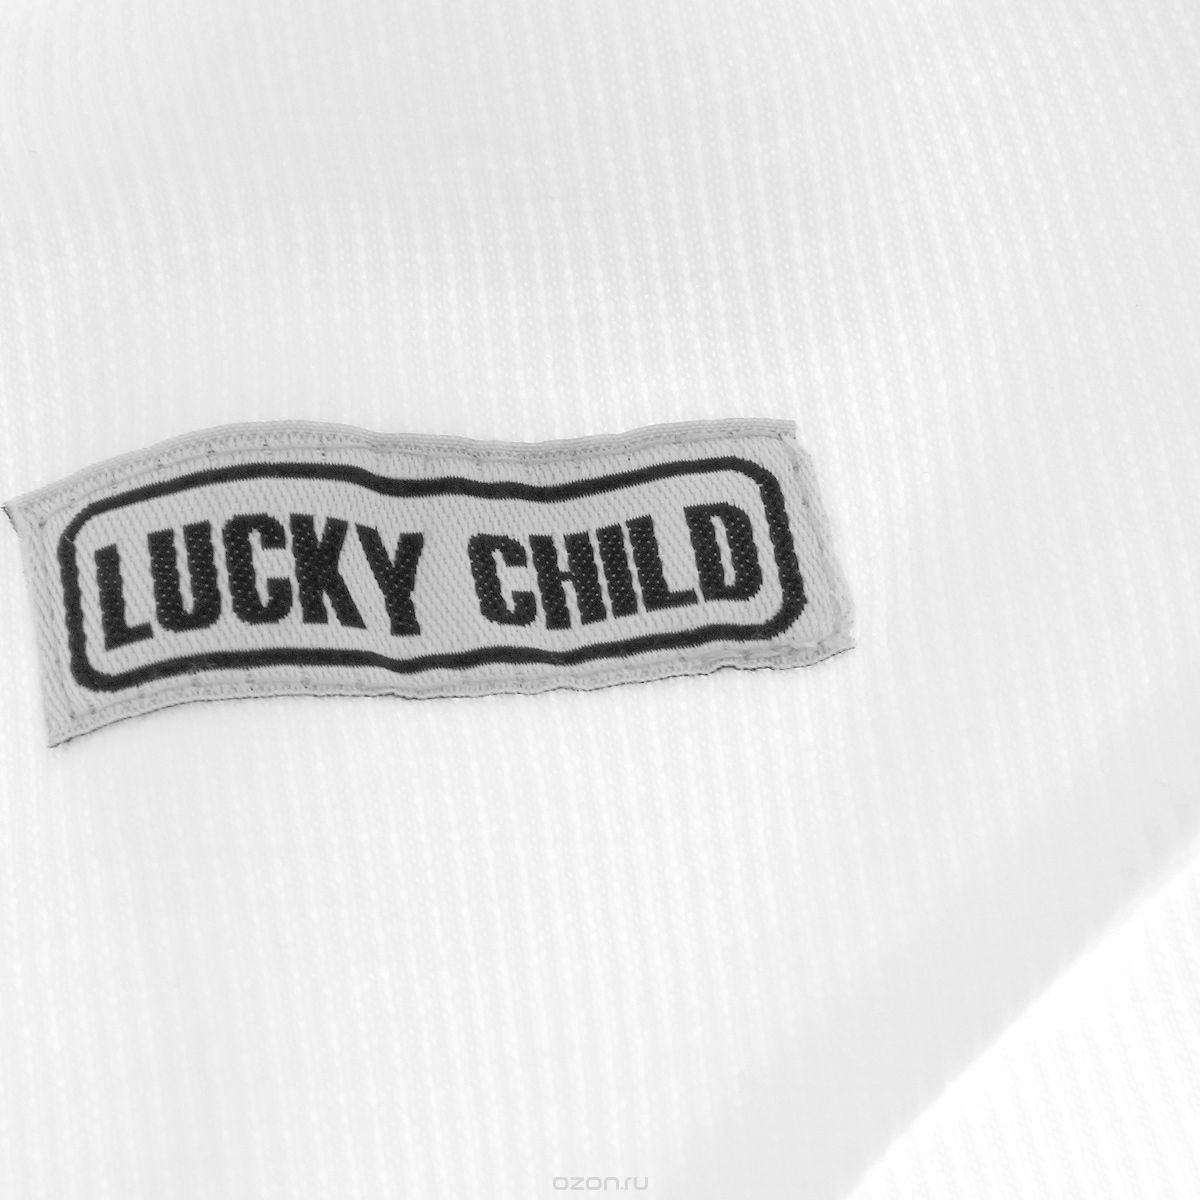   Lucky Child, : . 7-91.  38